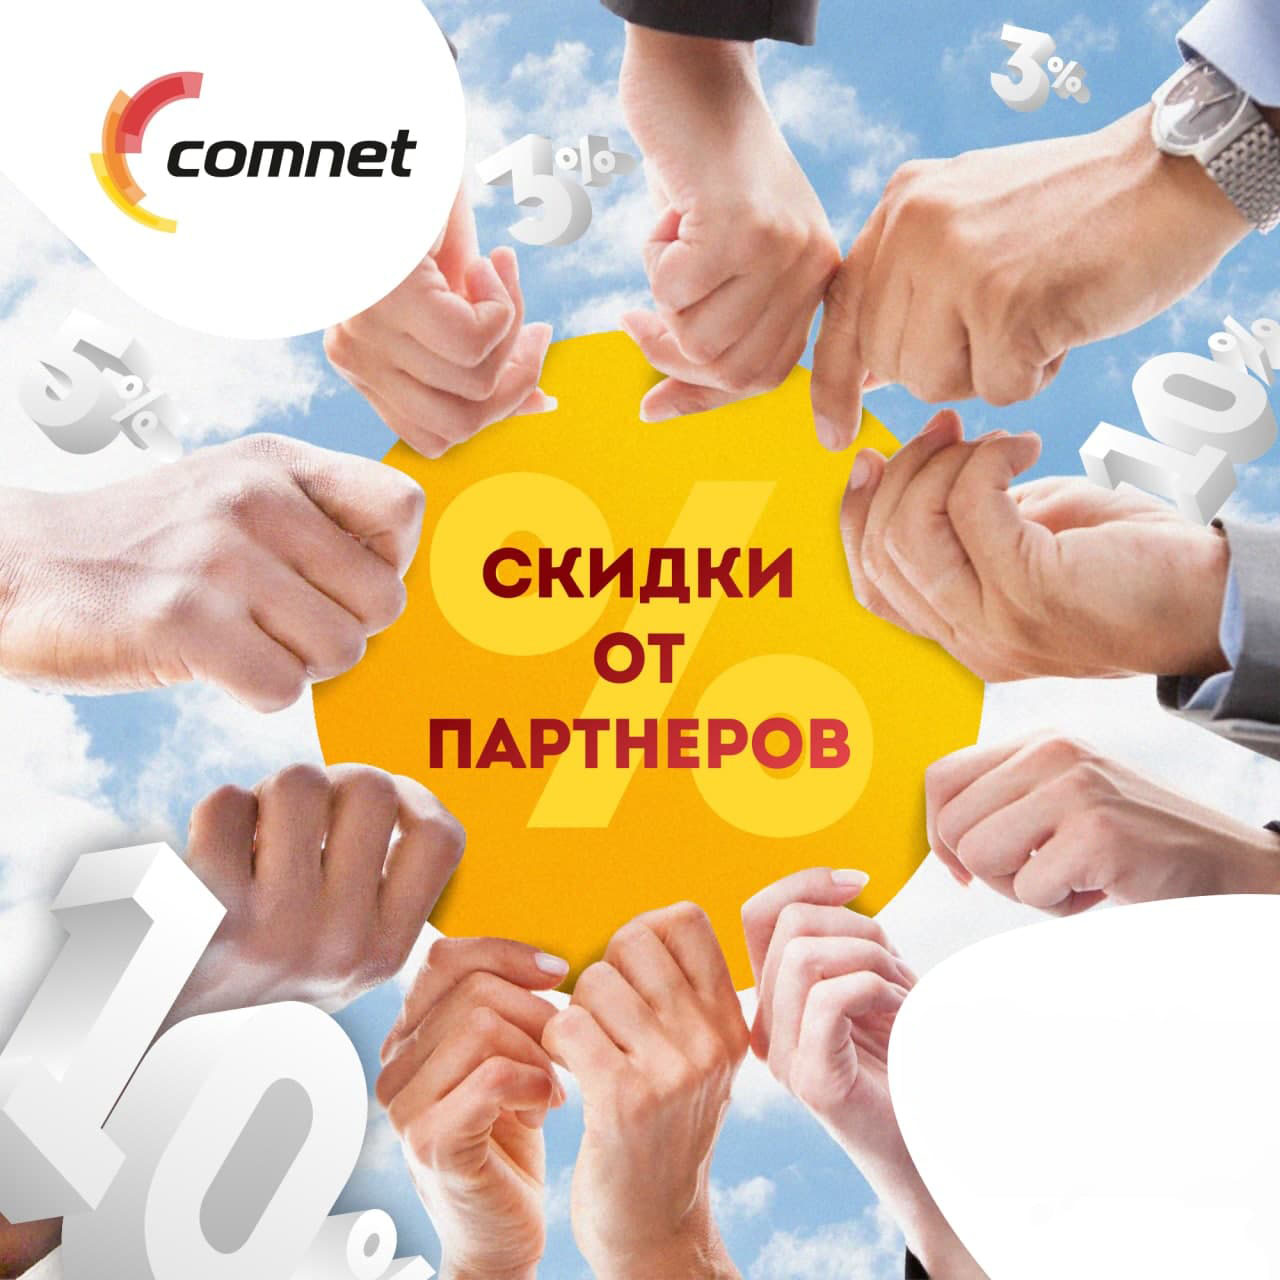 Comnet uz. COMNET uz logo. Акция приведи друга реклама. COMNET тарифы. Реклама COMNET.